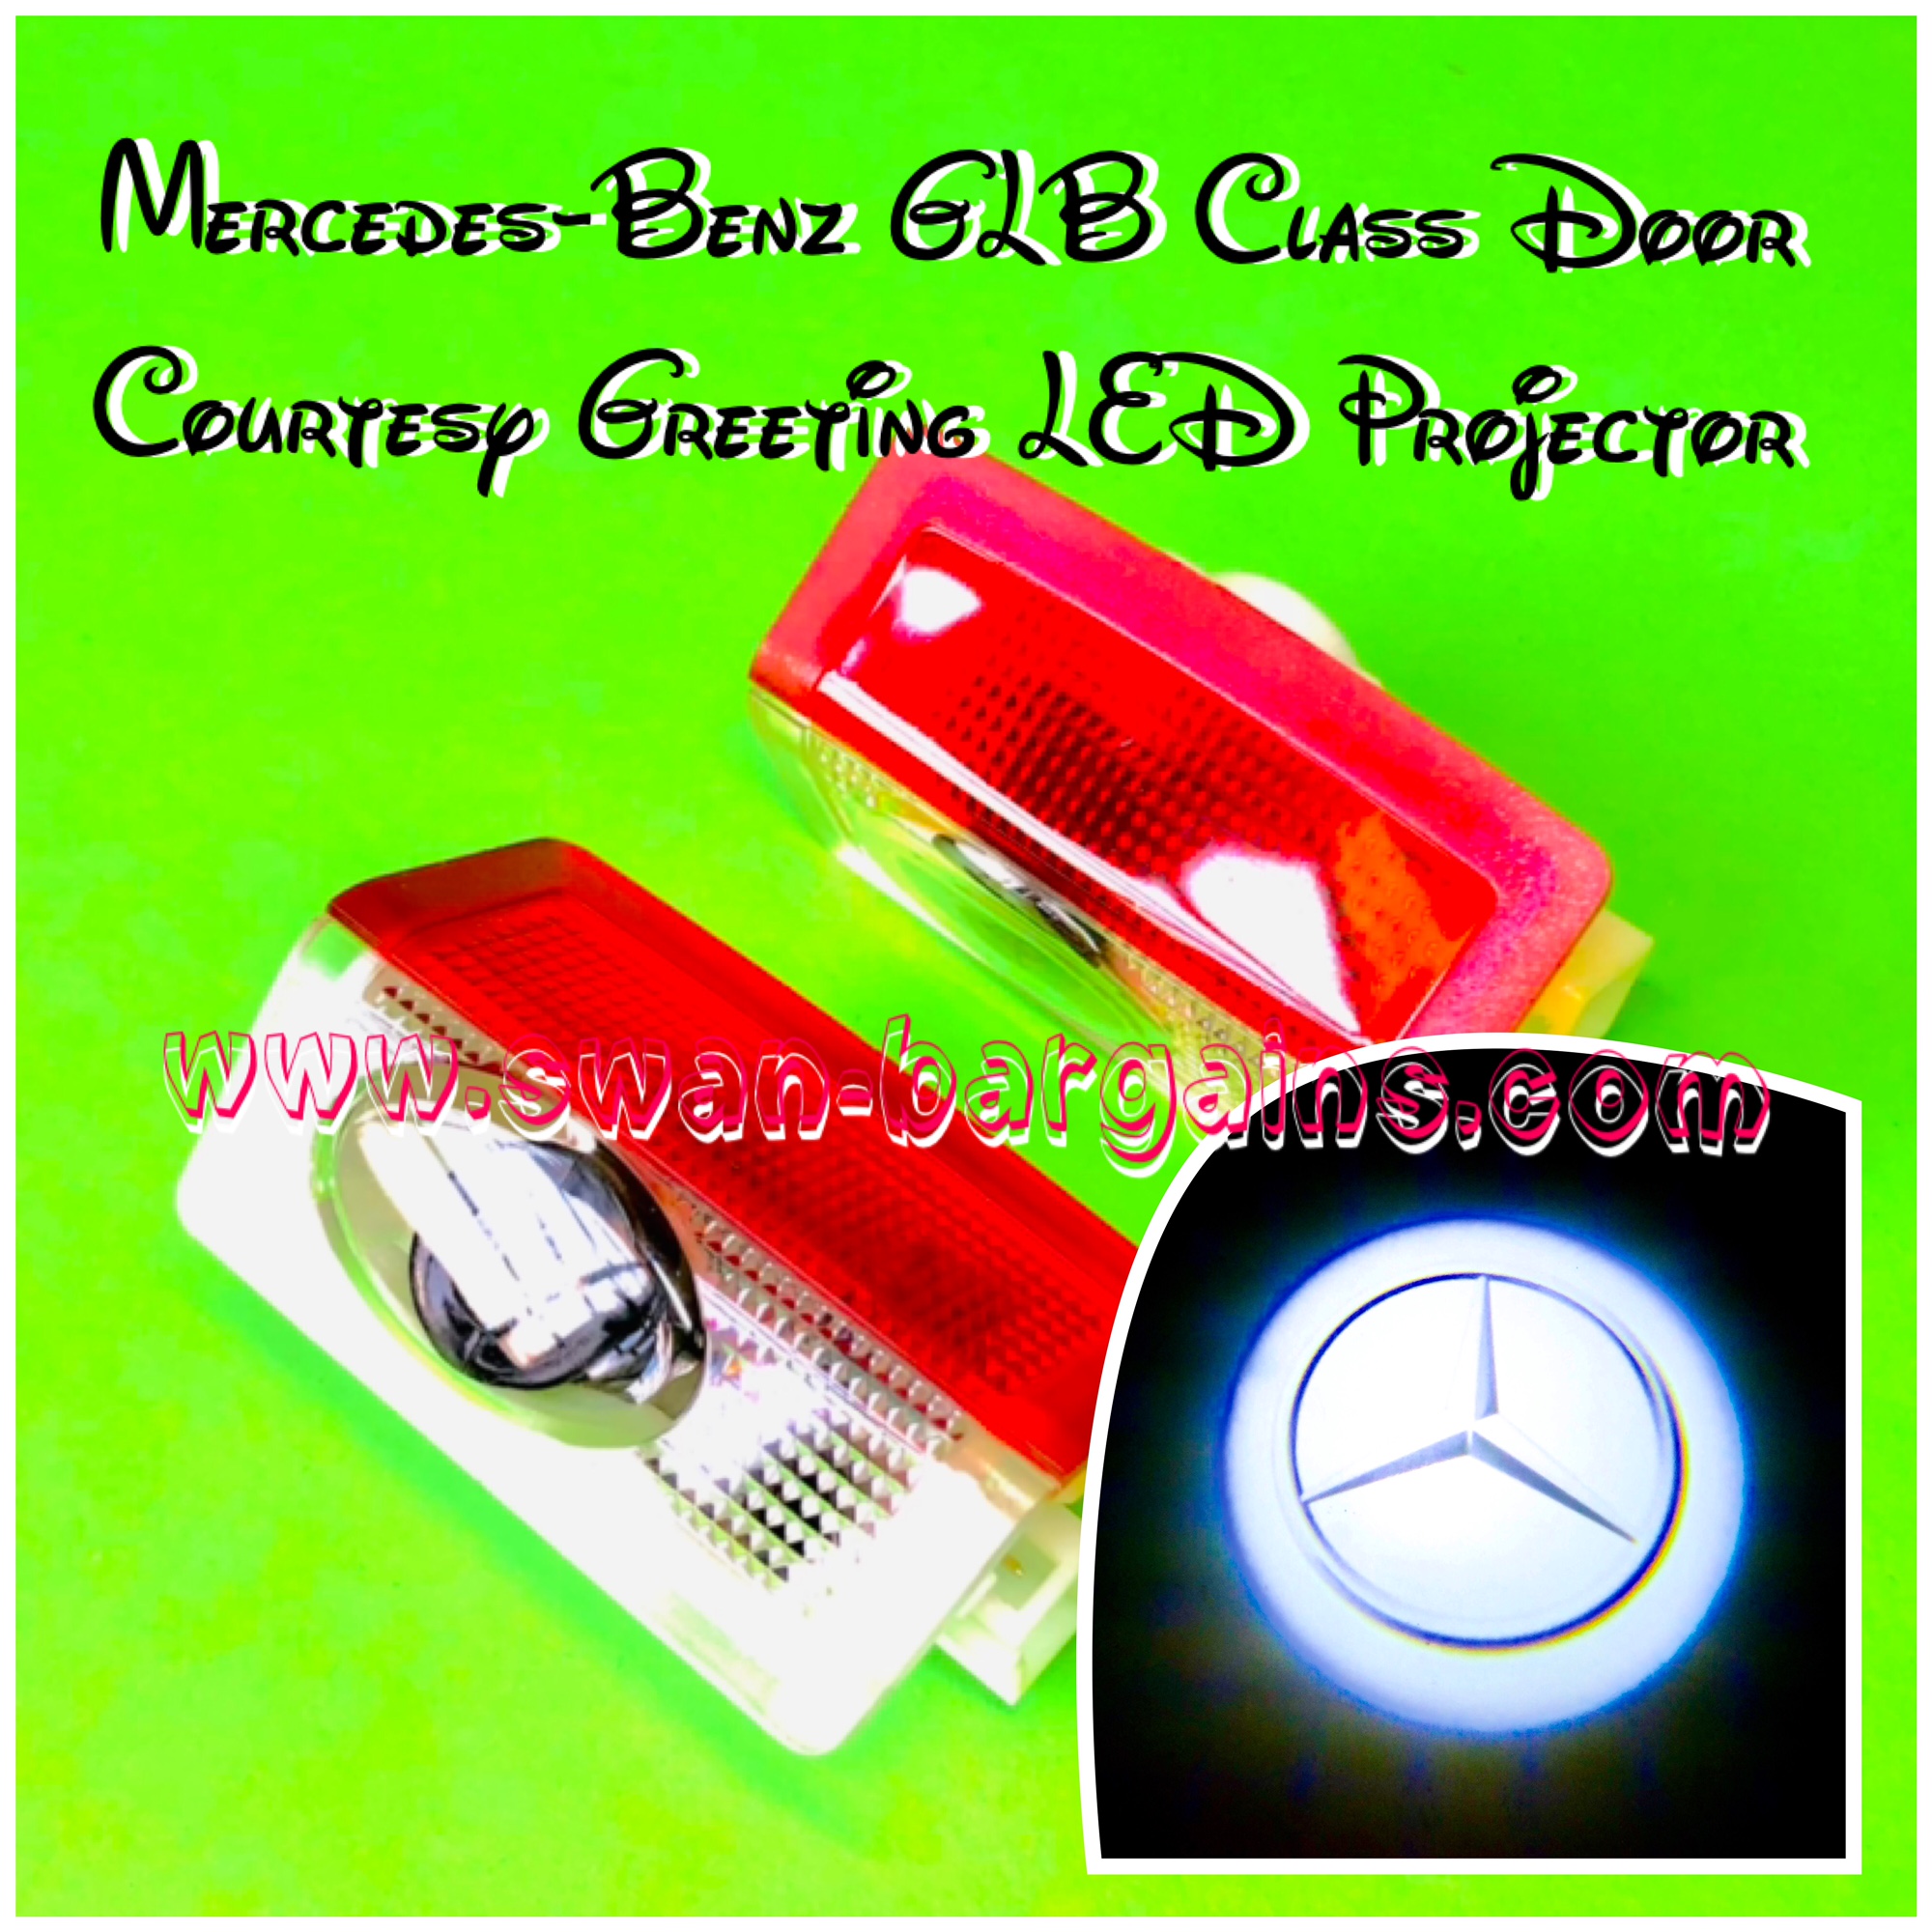 Mercedes Benz GLB Door Courtesy LED Projector Light Singapore - Full White Star